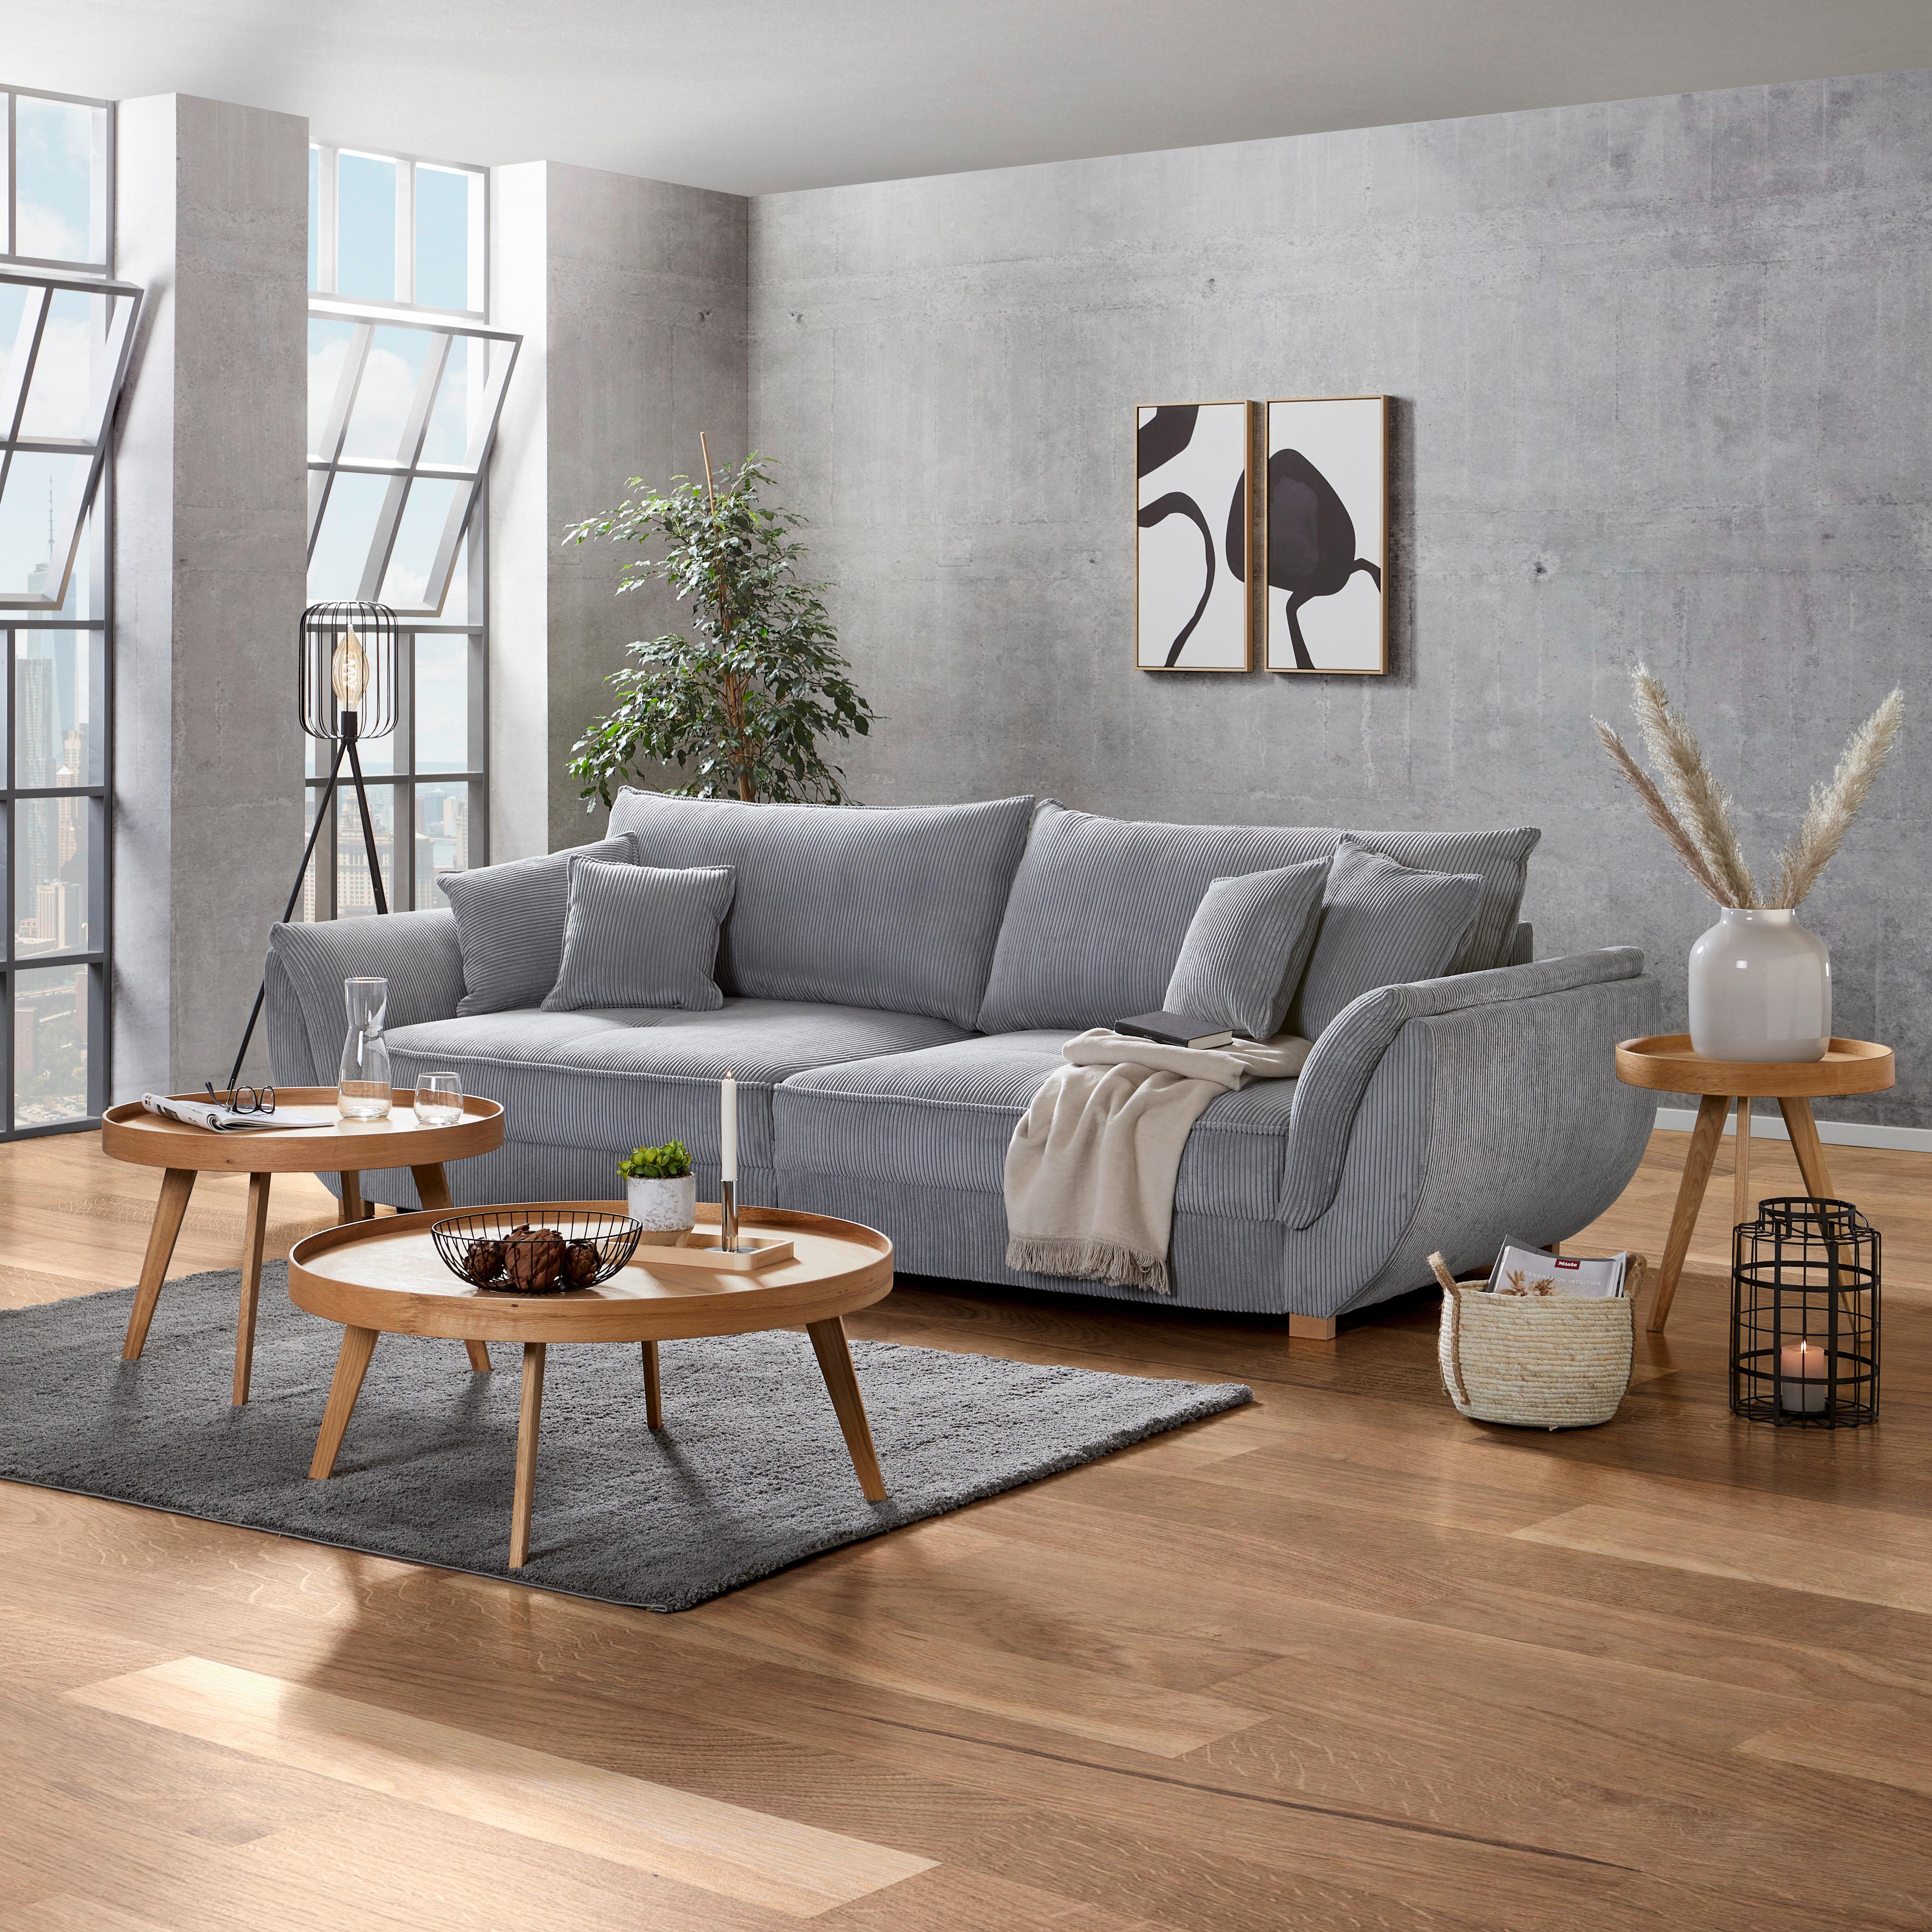 Big Sofa mit Schlaffunktion Guarda B: 301 cm Hellgrau - Hellgrau/Naturfarben, MODERN, Textil (301/92/114cm) - Luca Bessoni